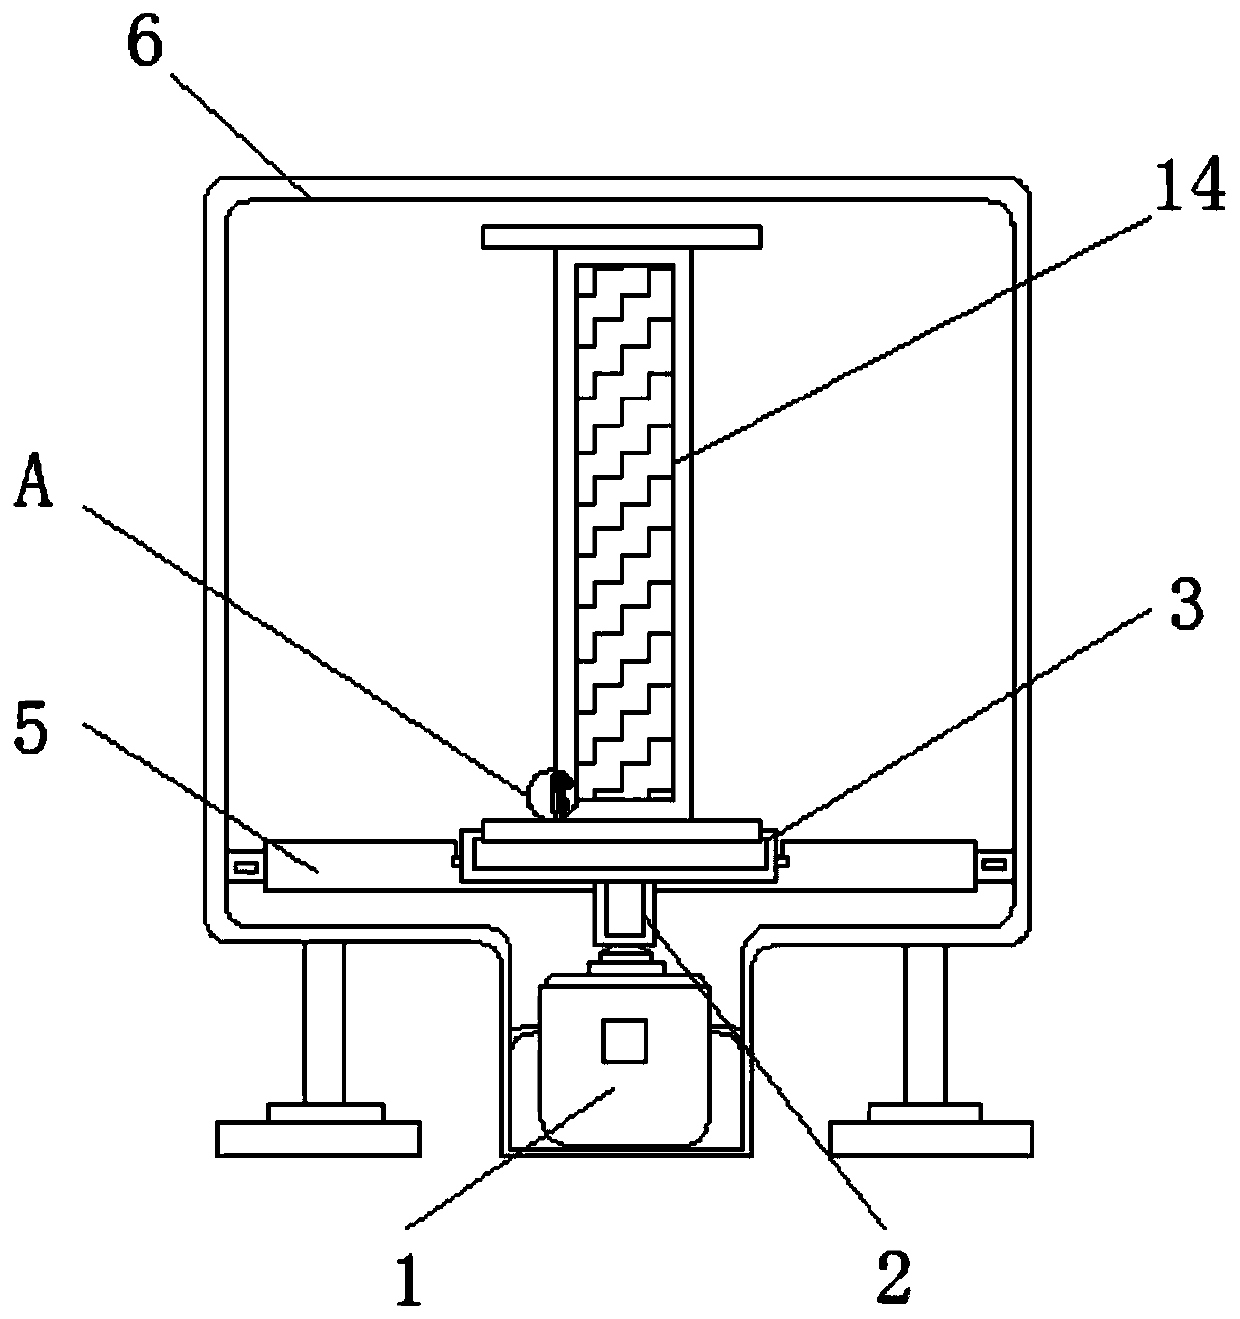 Spun yarn winding device for textile machine